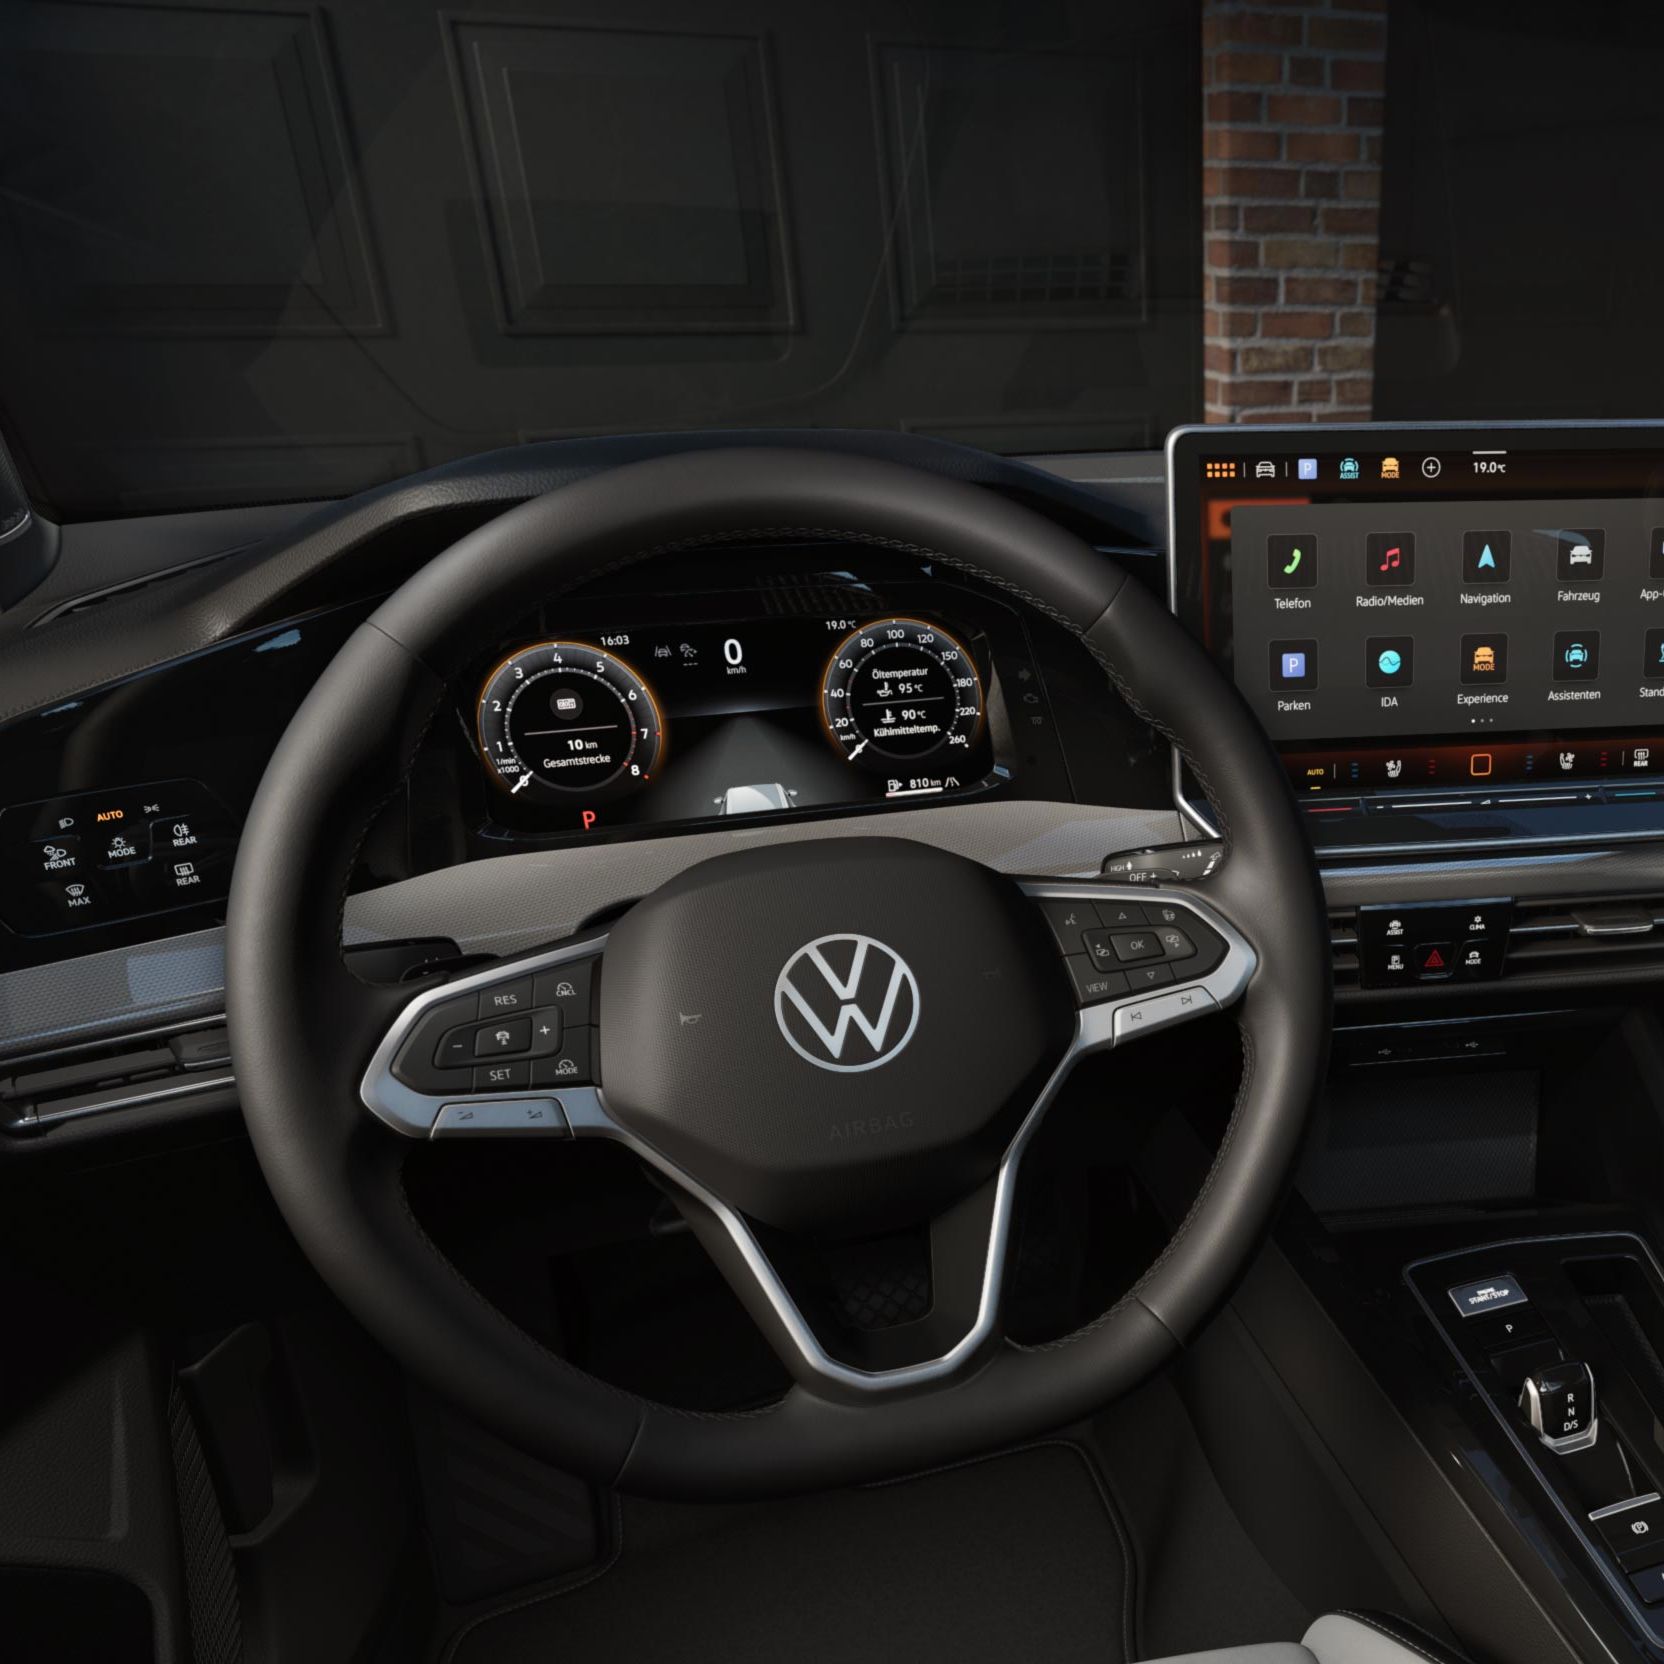 Lenkrad, Digital Cockpit, Sitze und Infotainment des VW Golf Variant